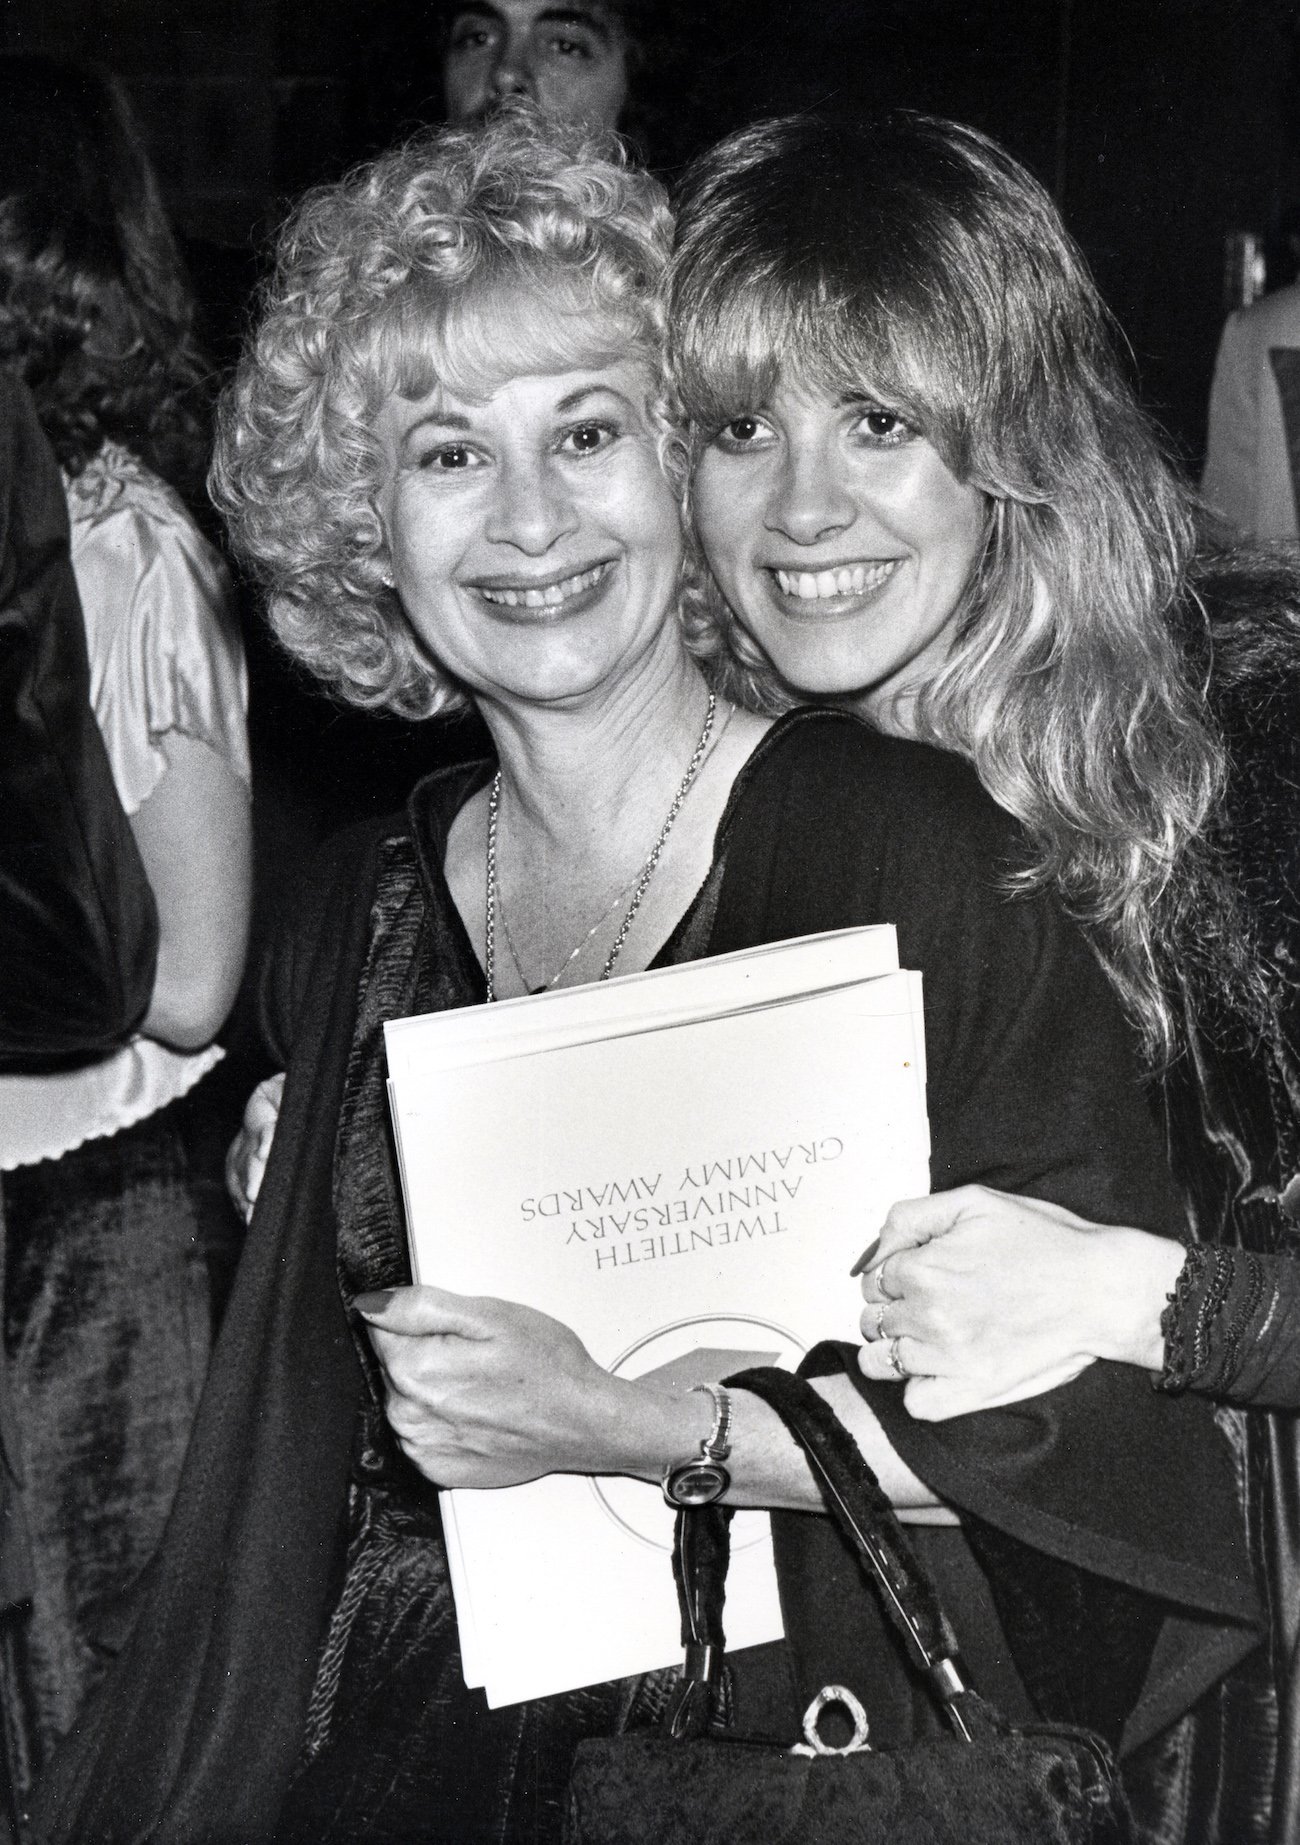 Stevie Nicks and her mother Barbara Nicks at the 1978 Grammy Awards.